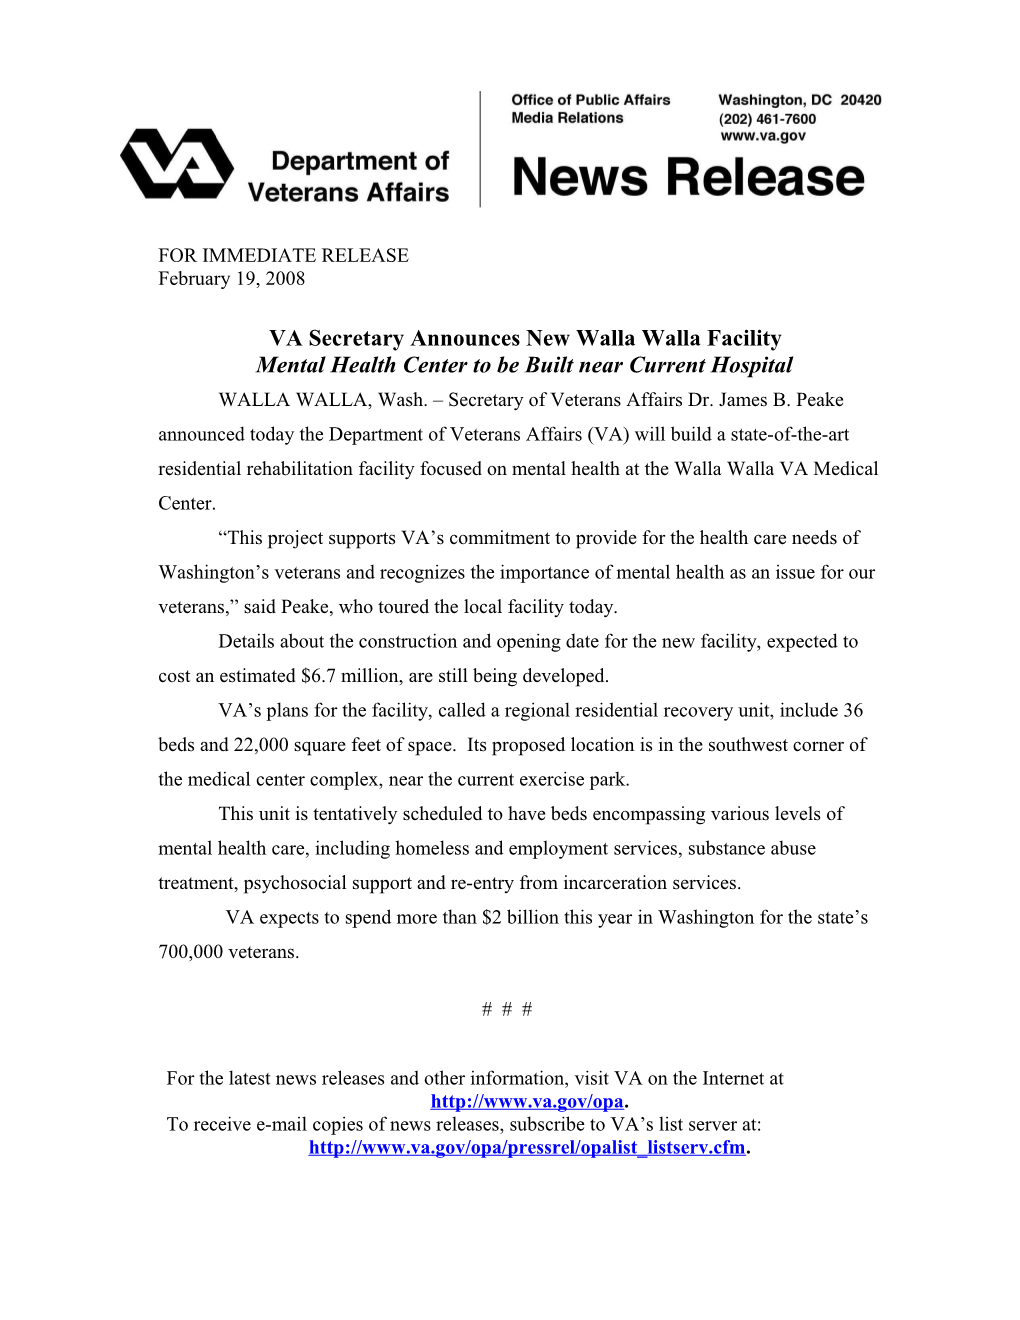 VA Secretary Announces New Walla Walla Facility